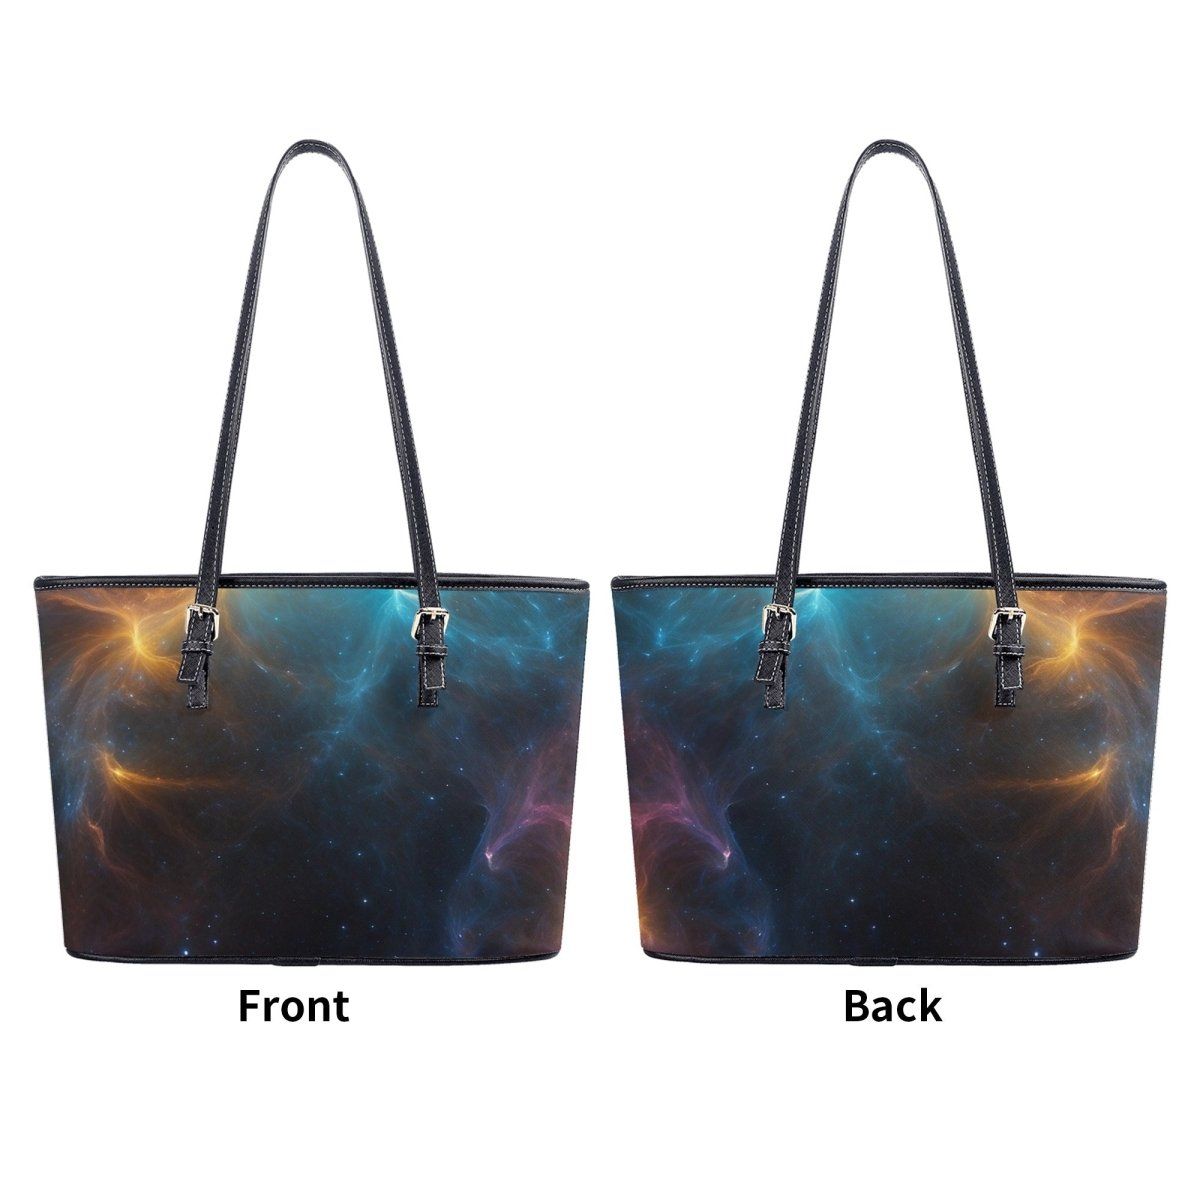 Fashion Celestial Inspired Tote Bag - Iron Phoenix GHG